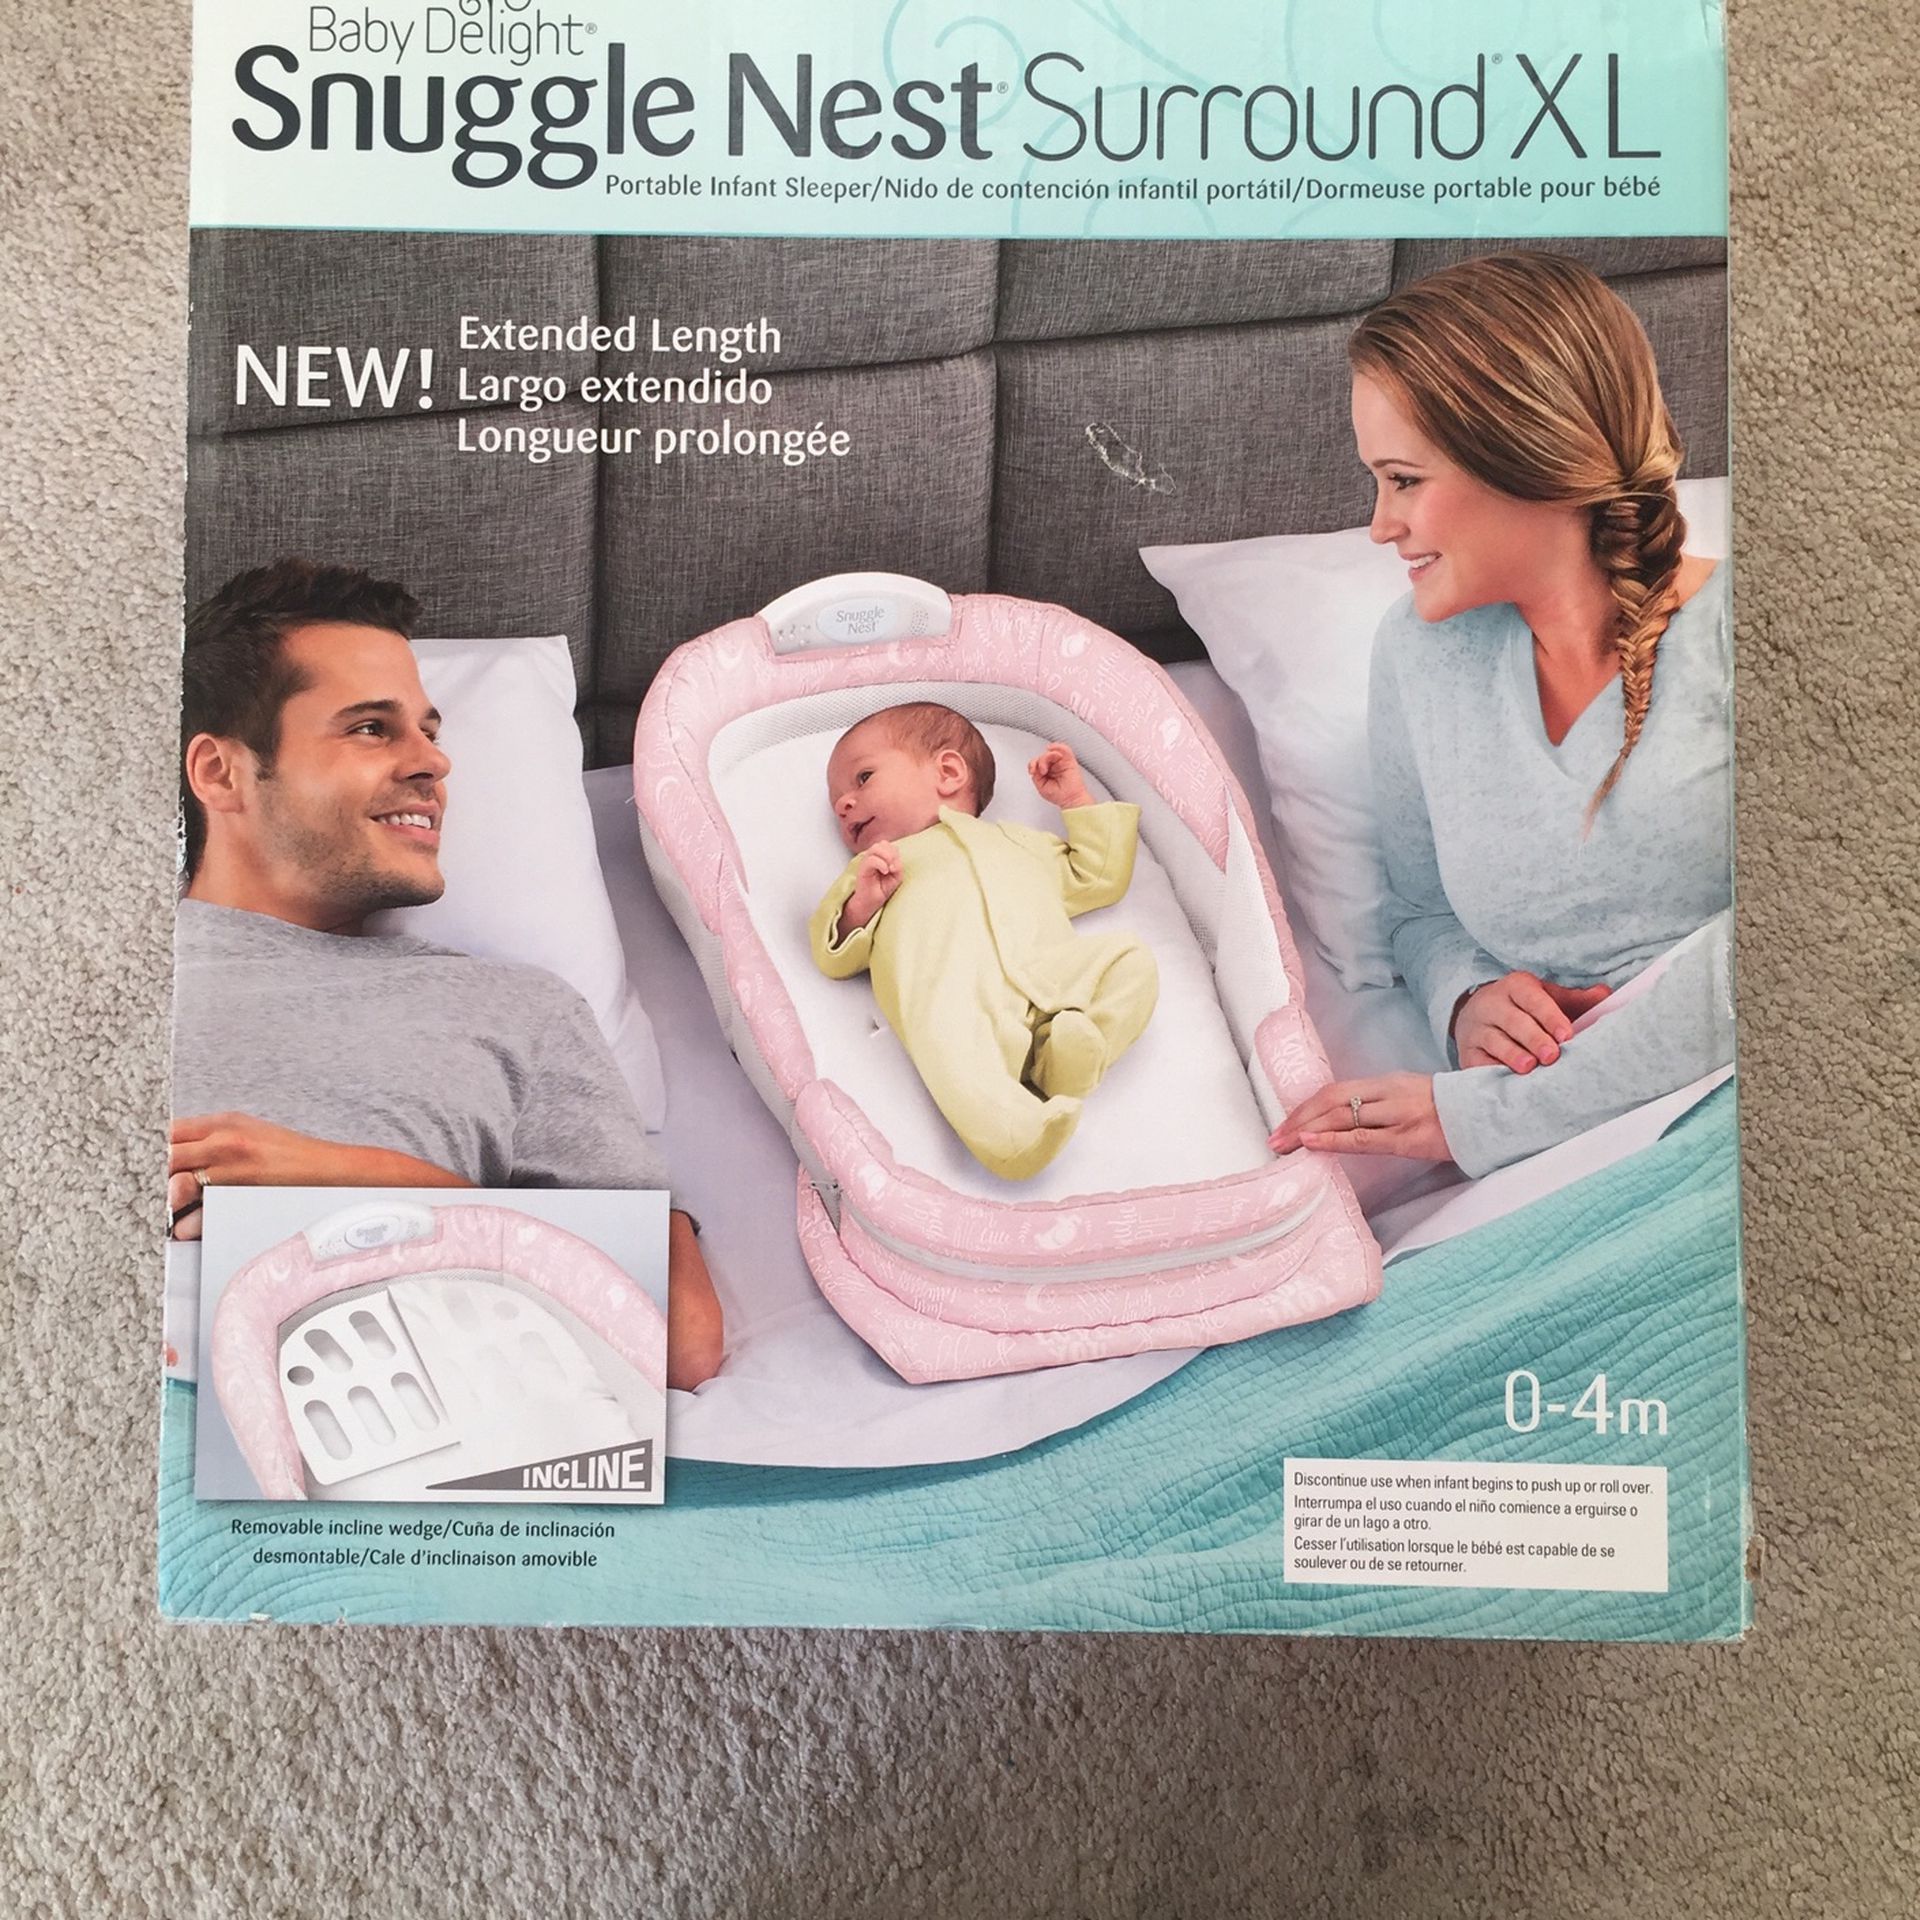 Snuggle Nest surround XL